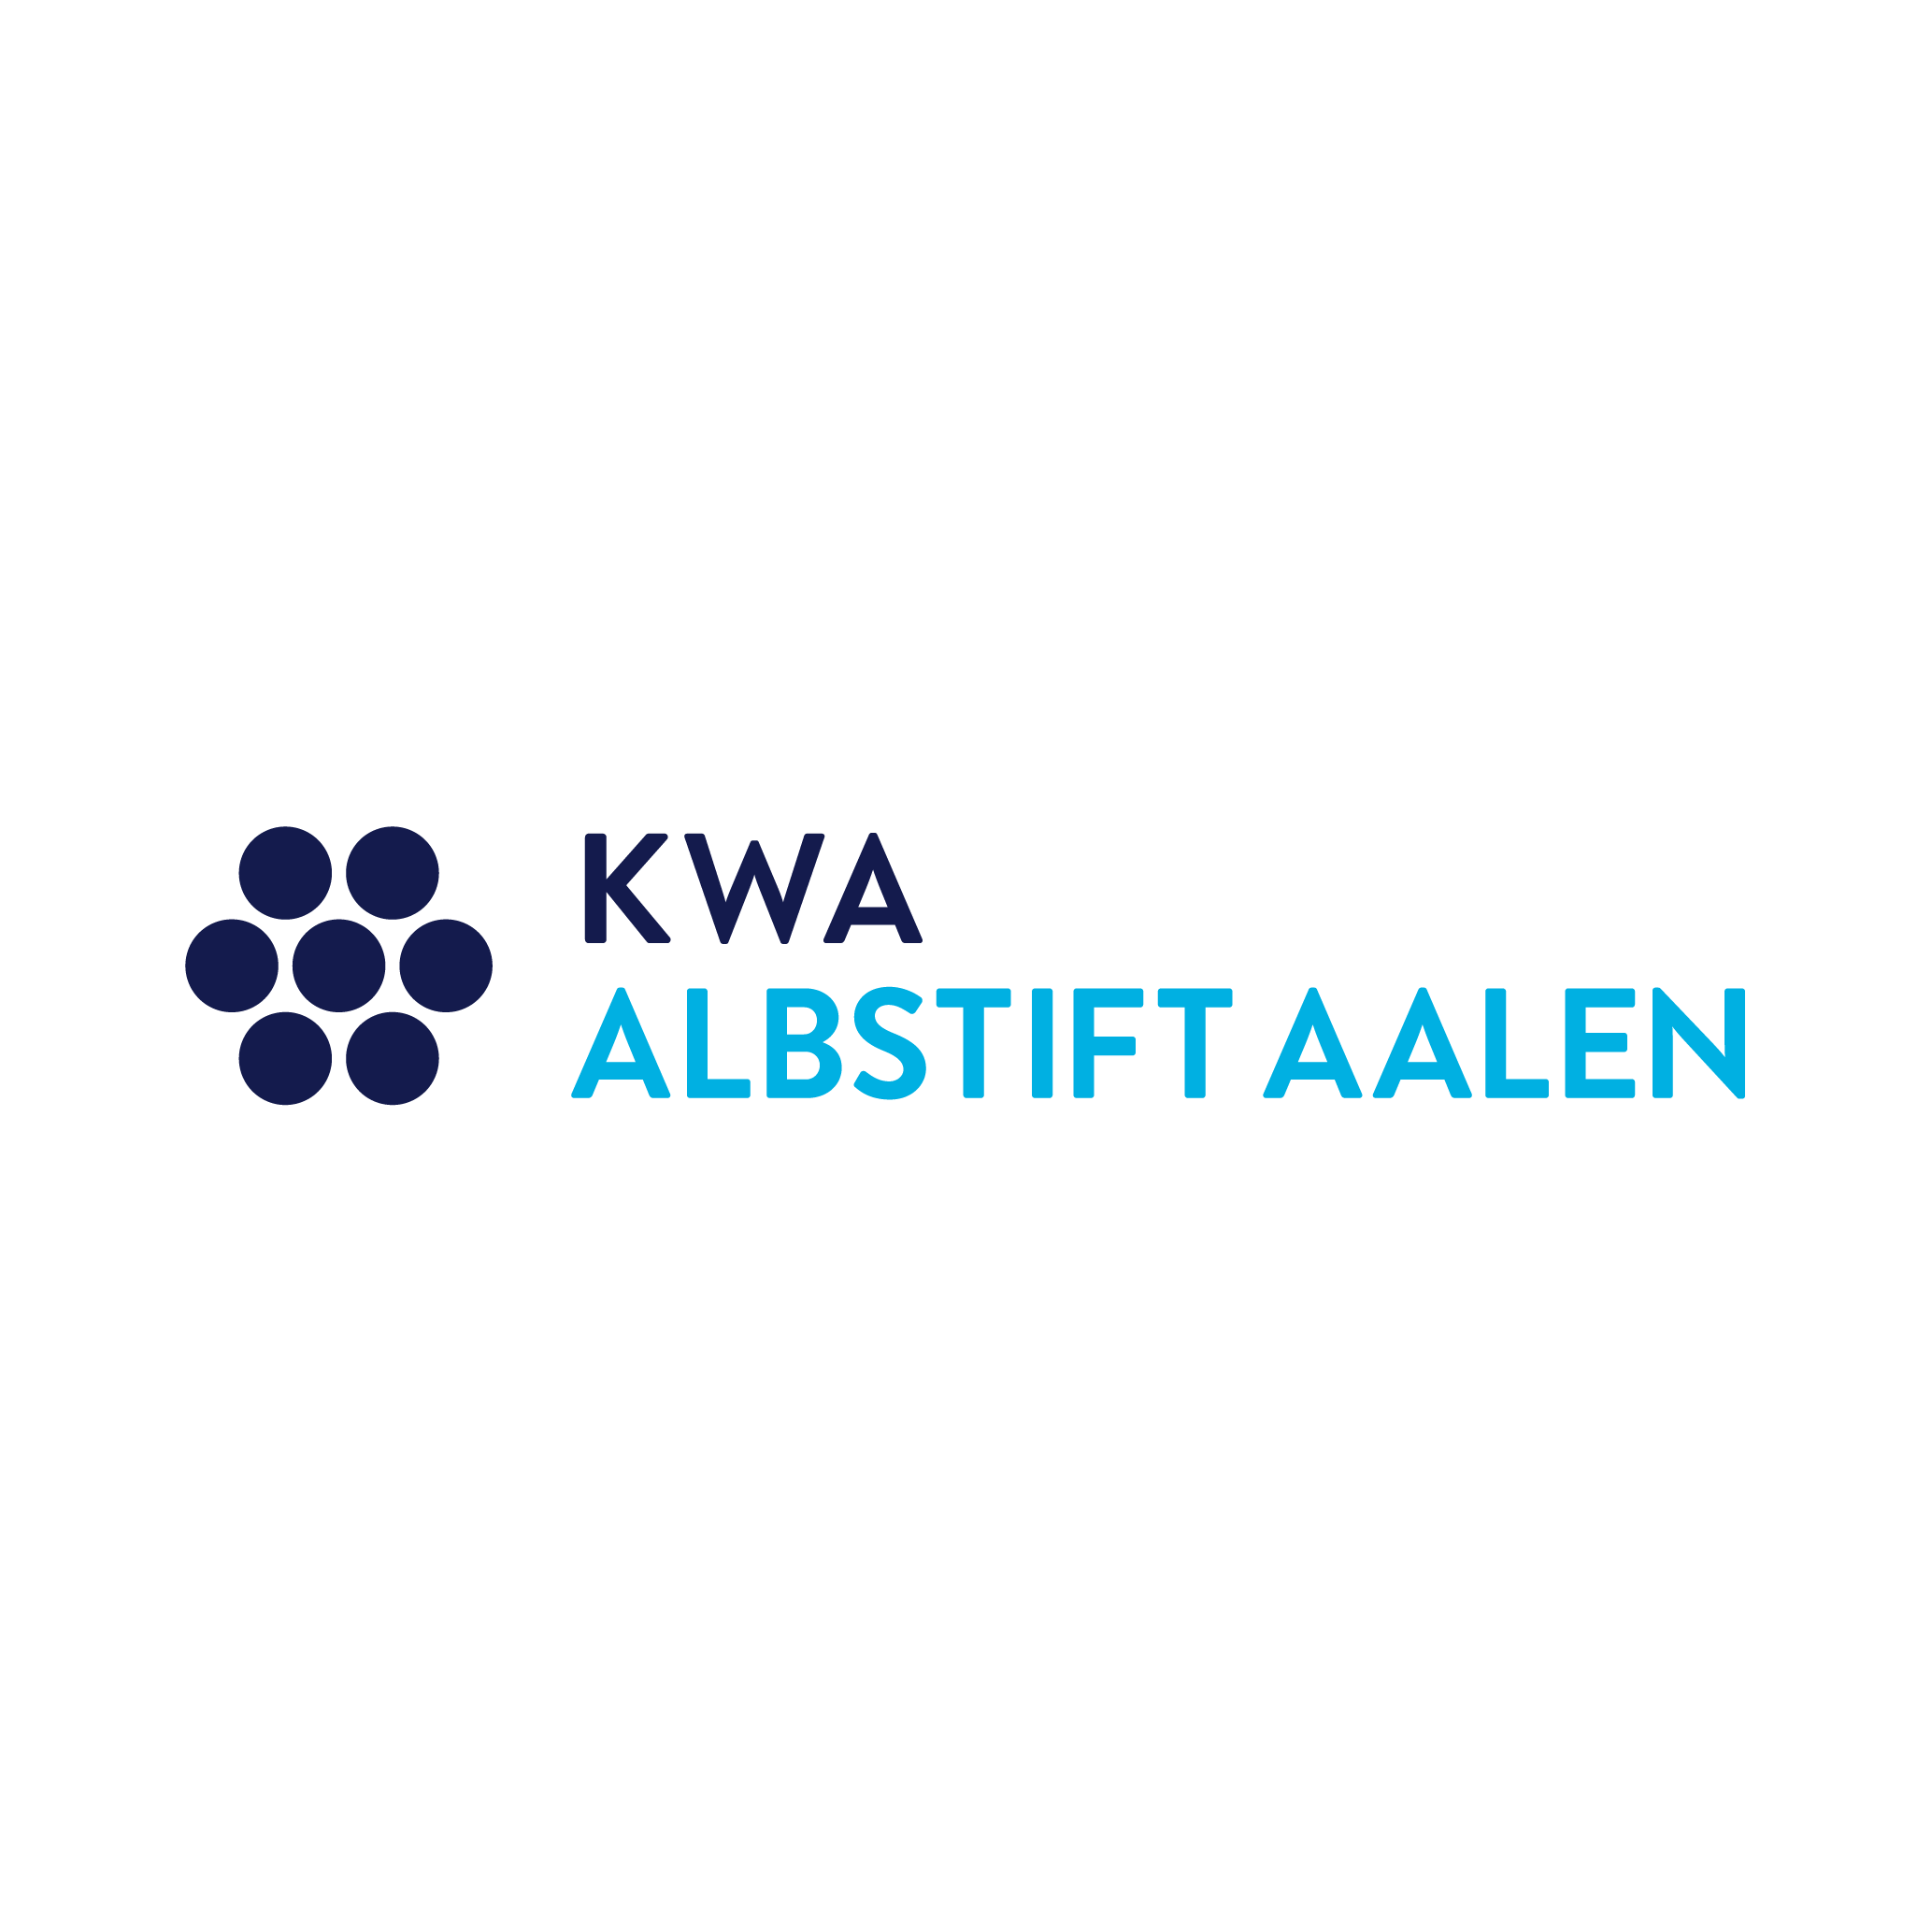 KWA Albstift Aalen in Aalen - Logo